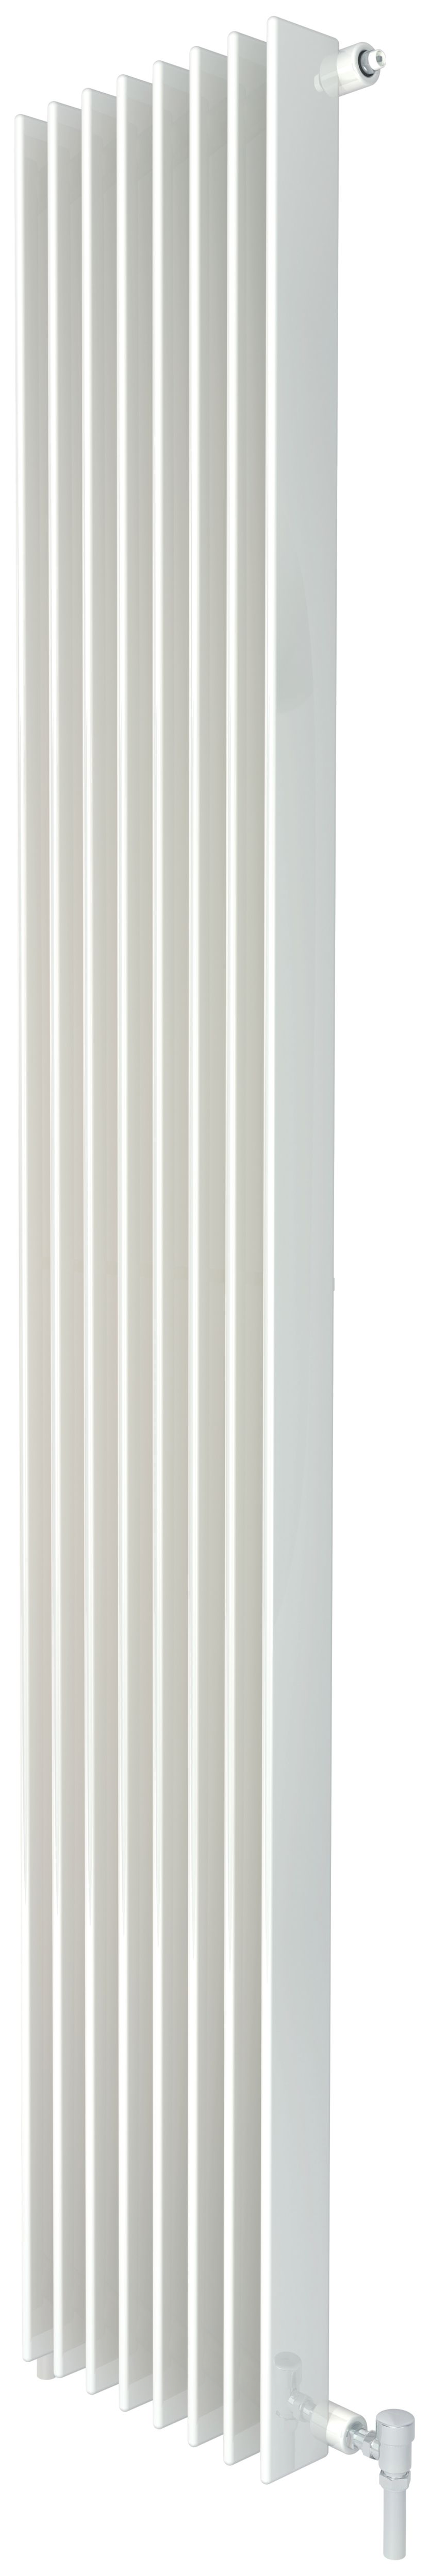 Image of Henrad Verona Slim Single Panel Vertical Designer Radiator - White 2000 x 520 mm